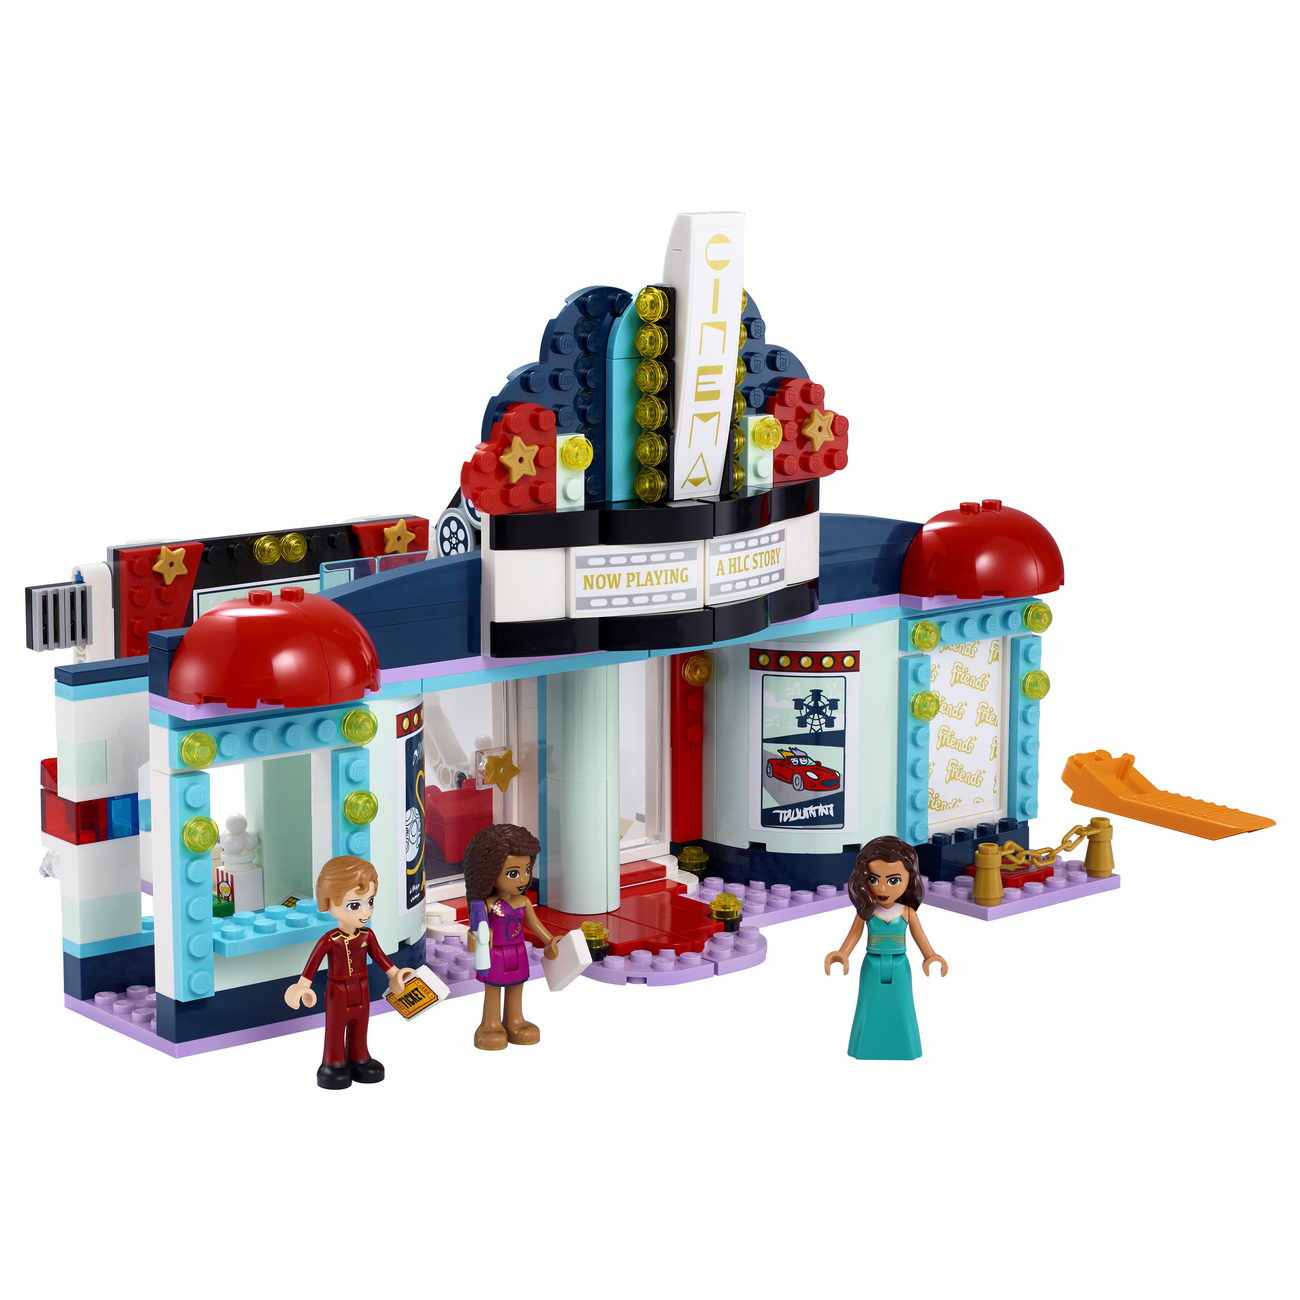 LEGO Friends 41448 - Heartlake City Kino